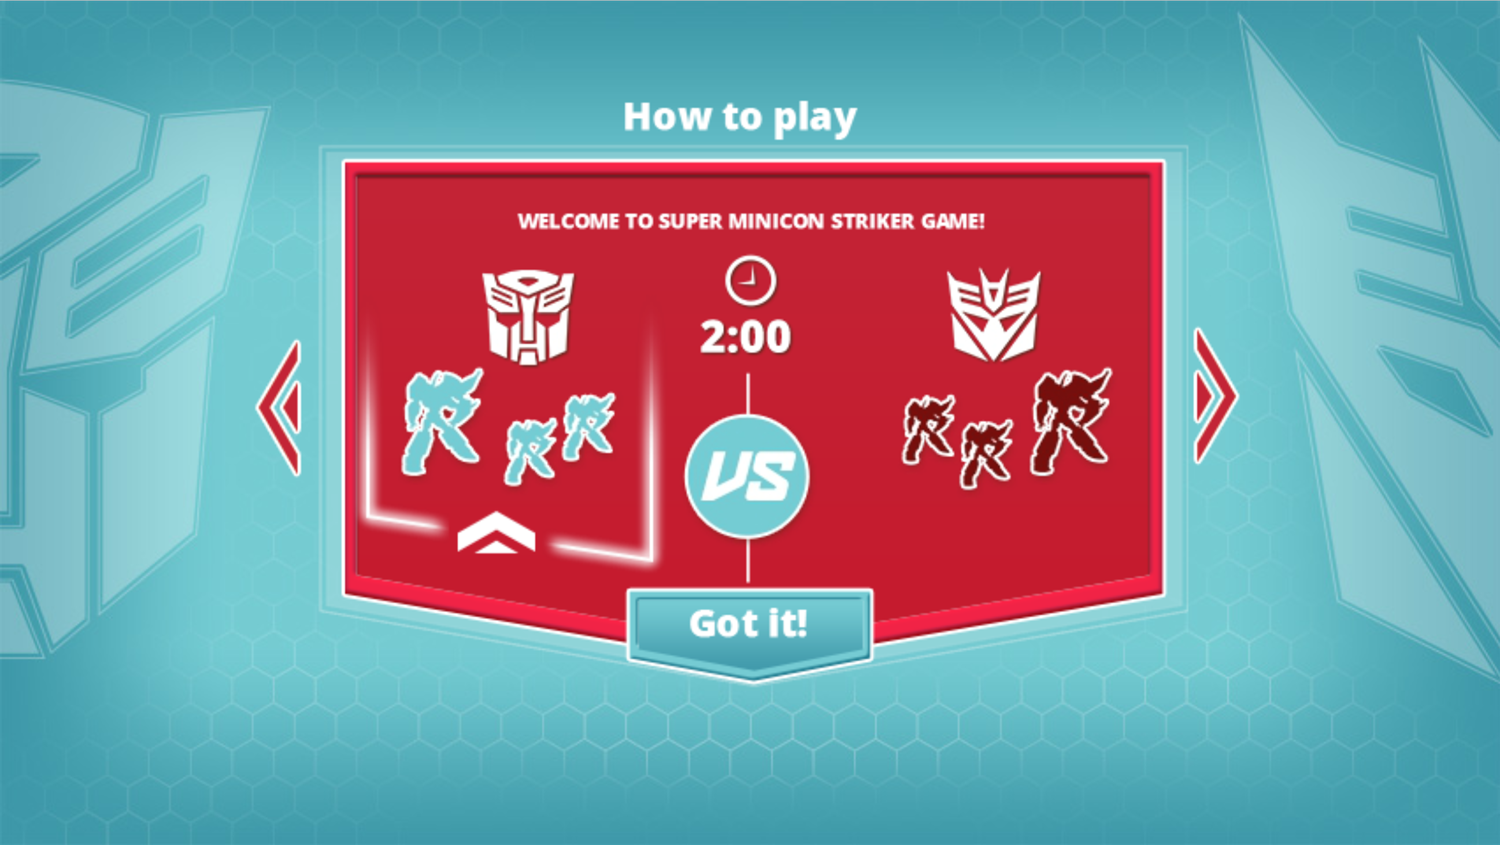 Transformers Super Mini Con Striker Game How to Play Game Time Screen Screenshot.